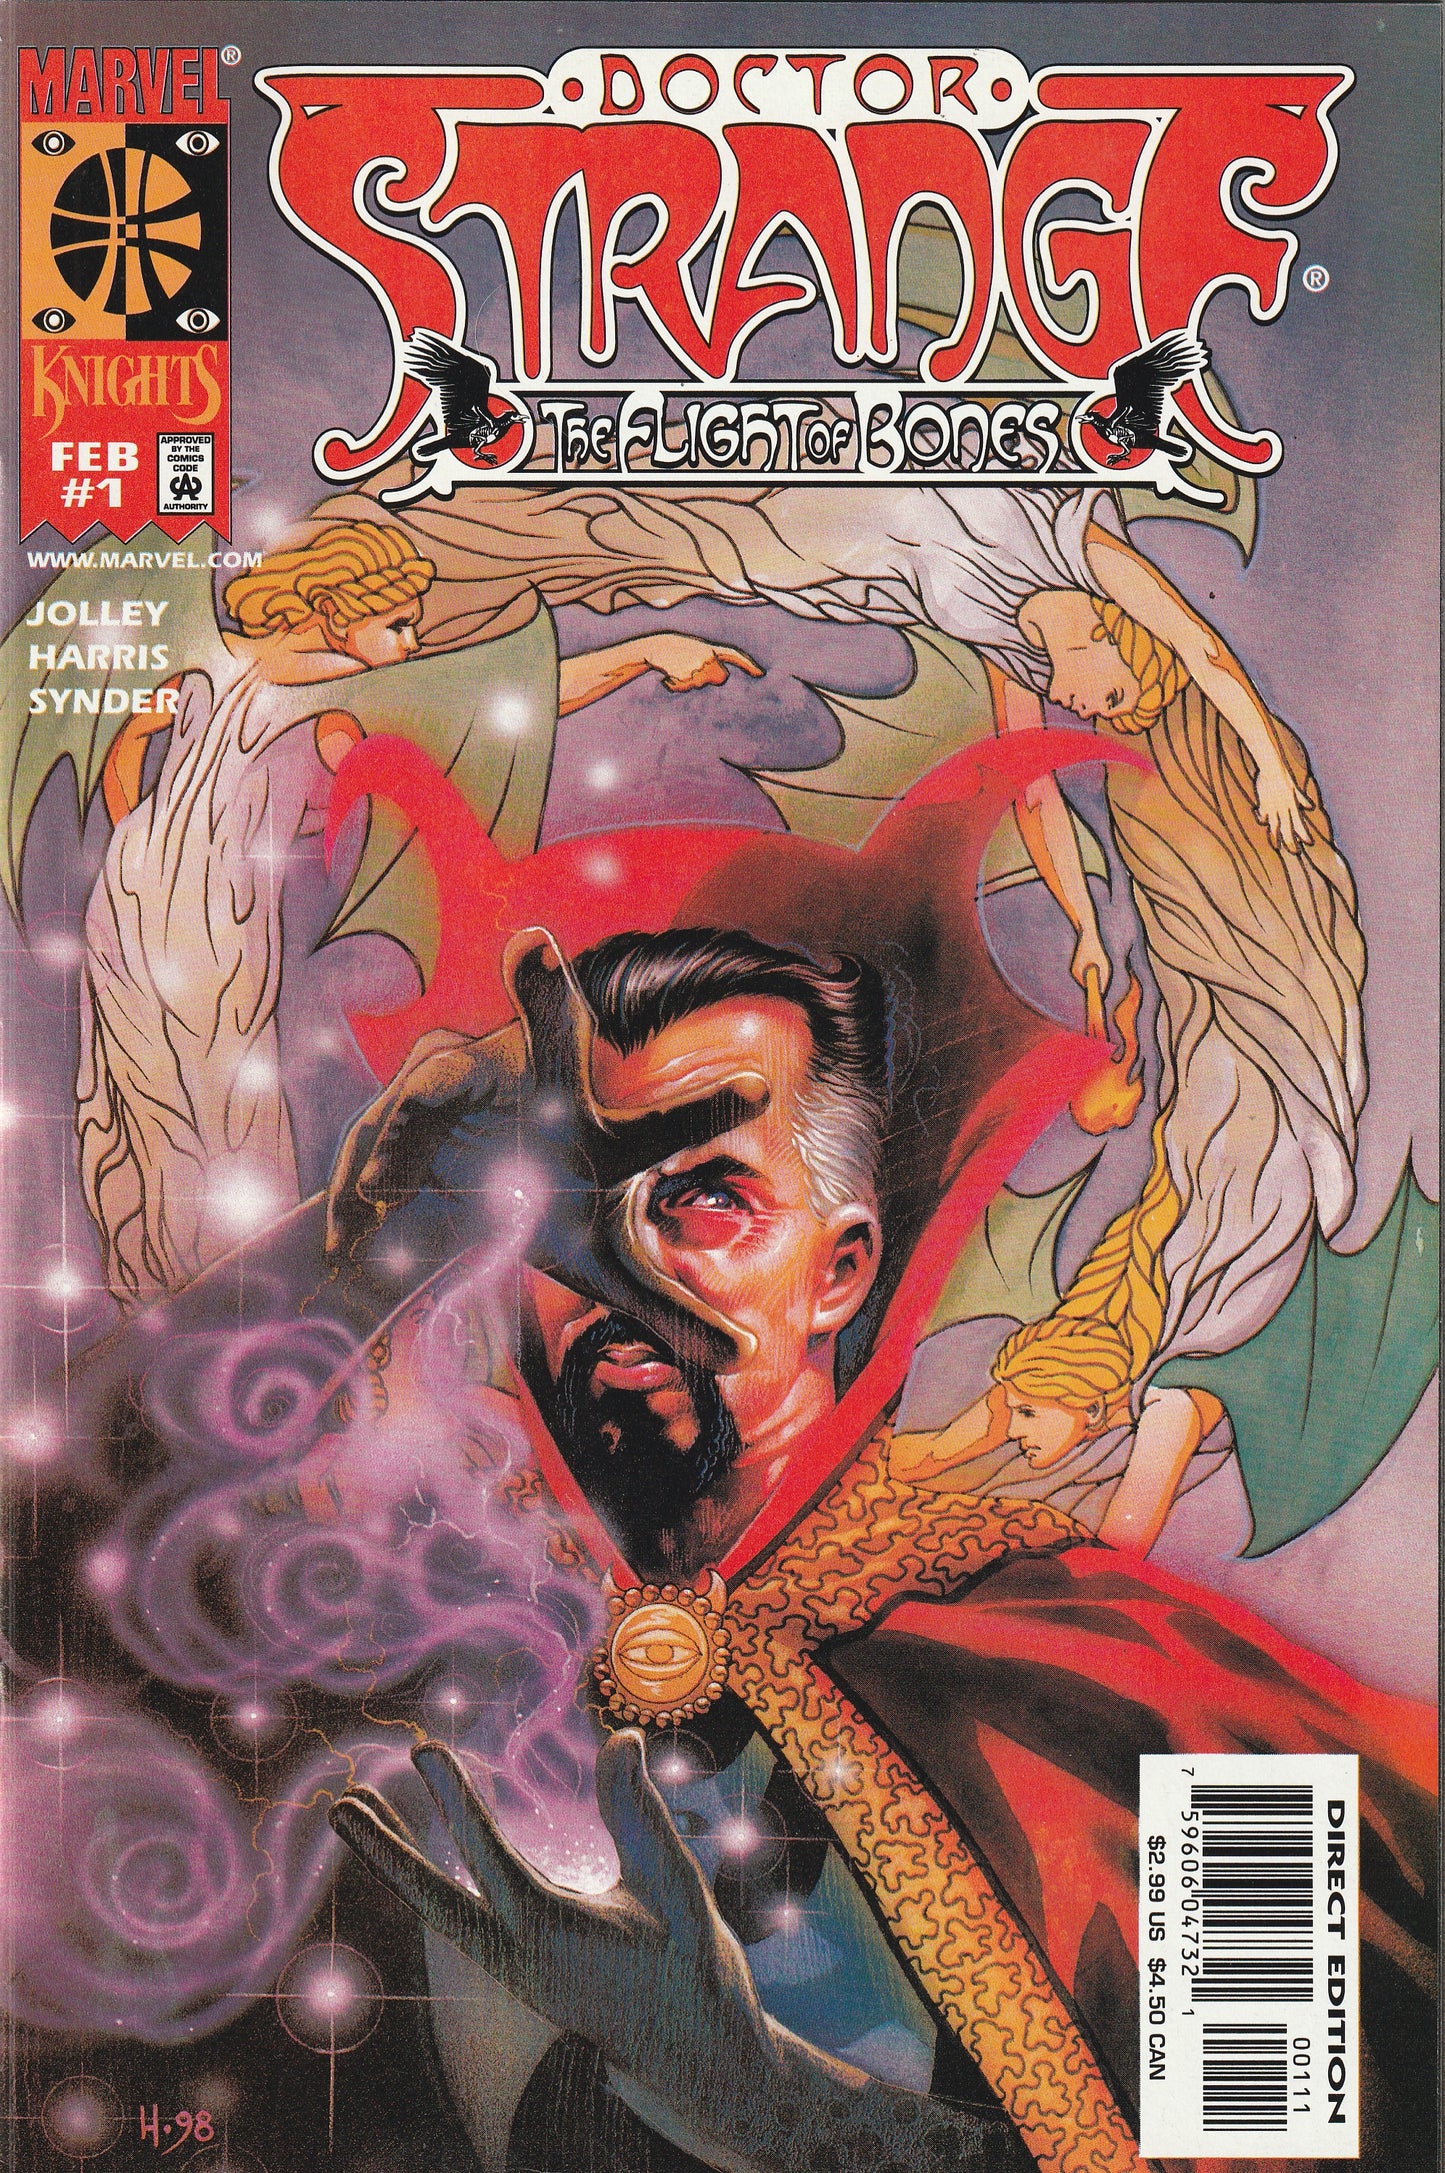 Doctor Strange: The Flight of Bones (1999) - 4 issue mini series